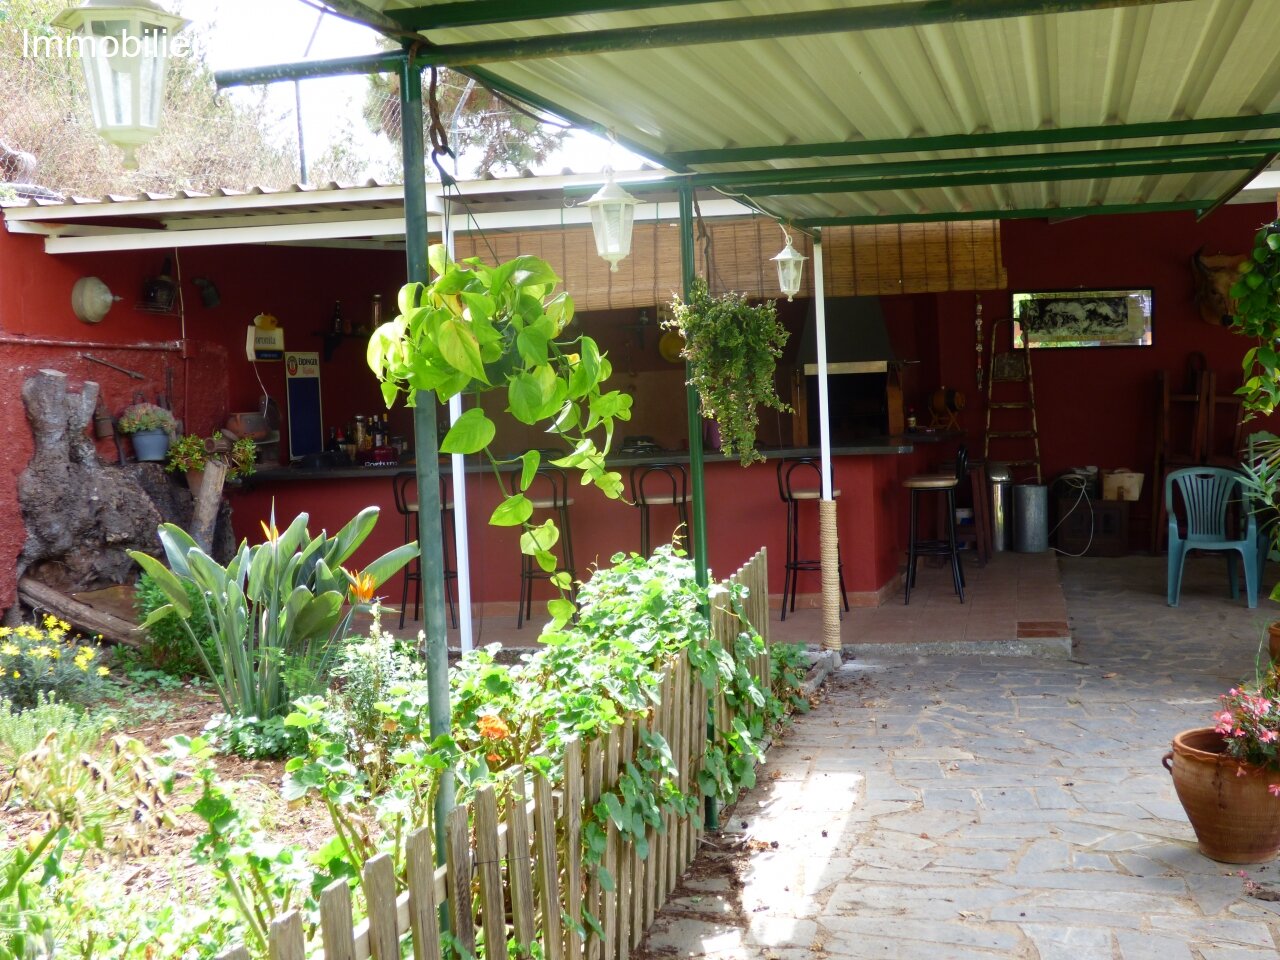 Outdoor kitchen and vegetable garden